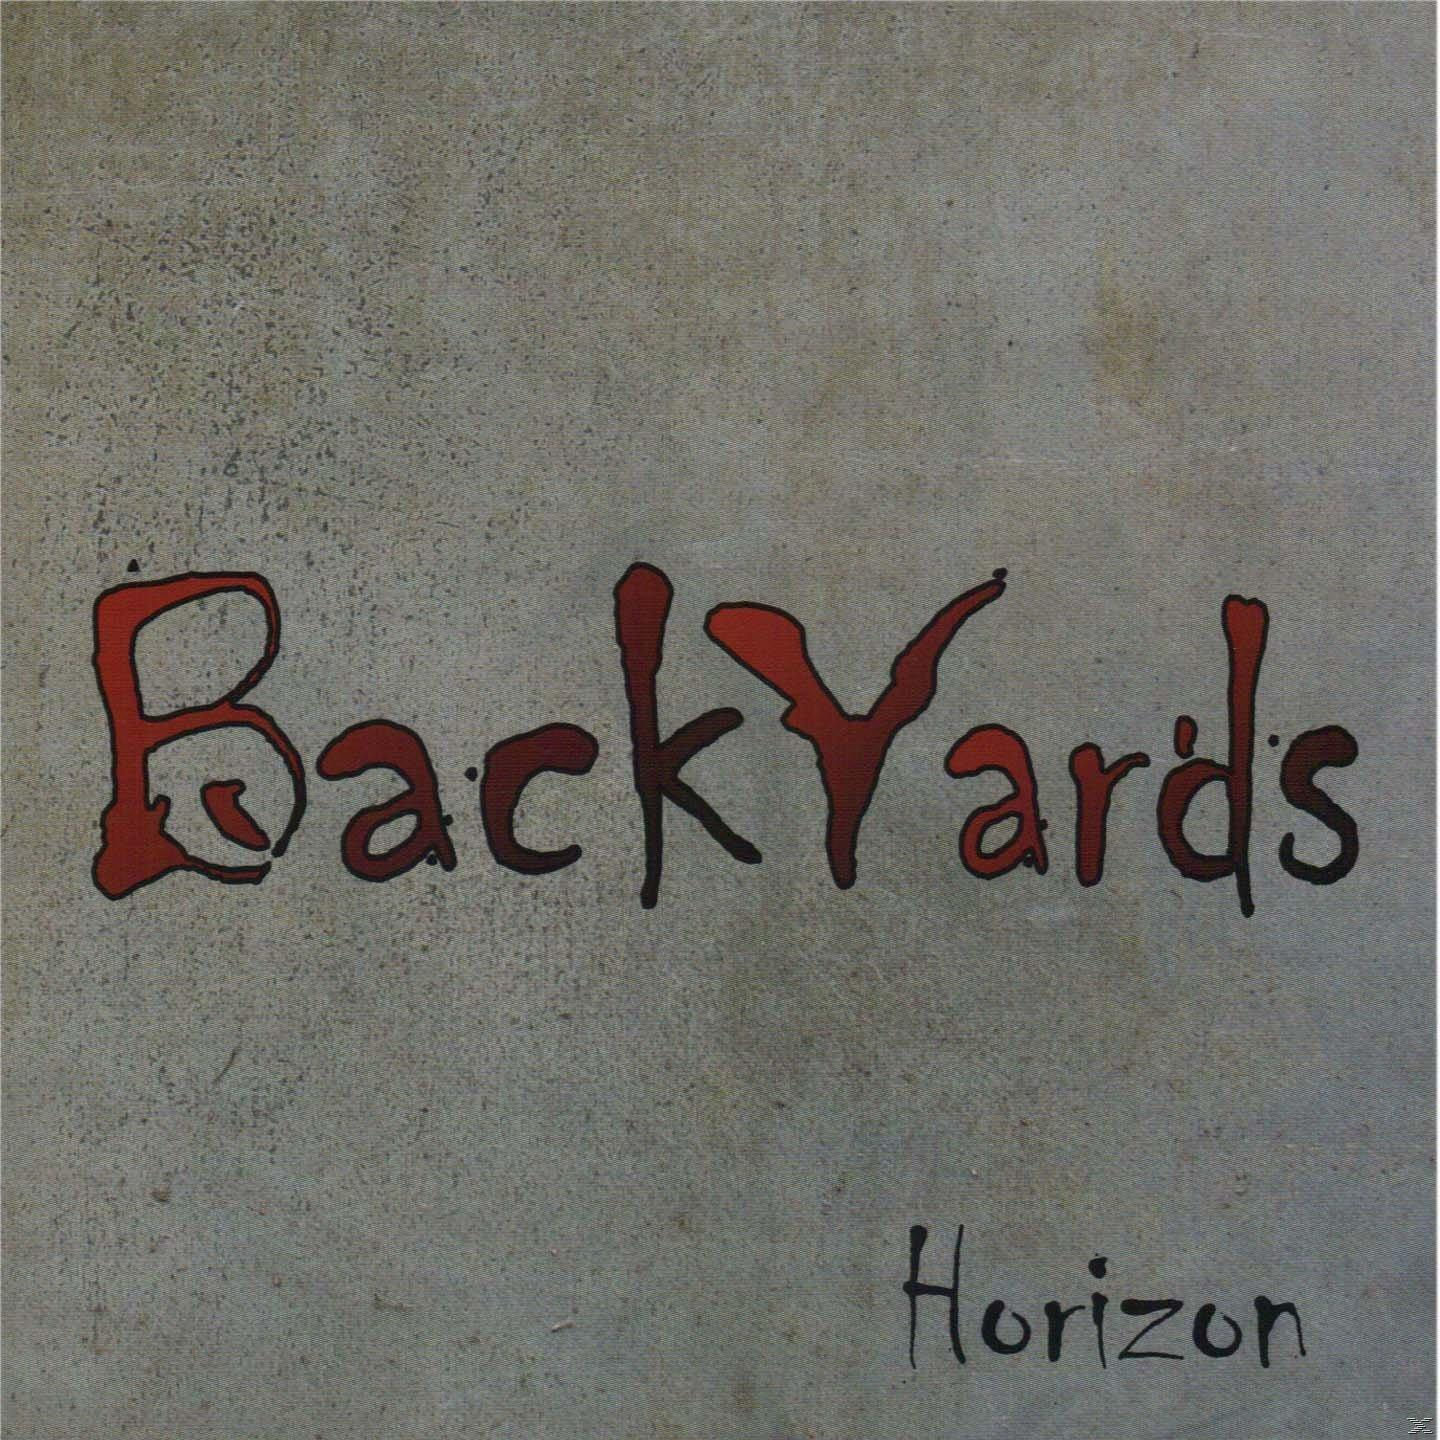 Backyards - (CD) - Horizon